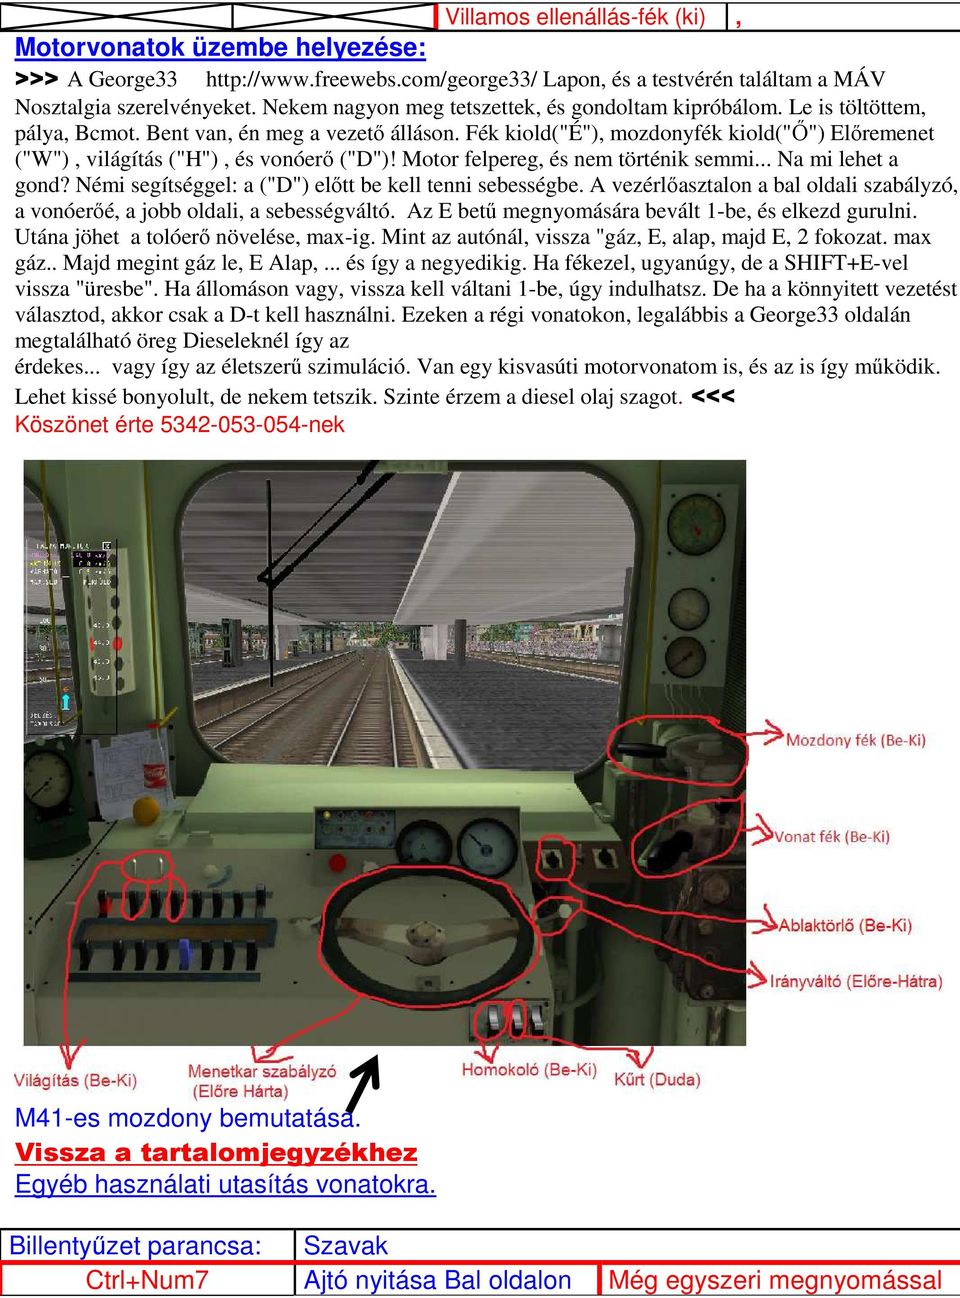 MICROSOFT TRAIN SIMULATOR - PDF Free Download